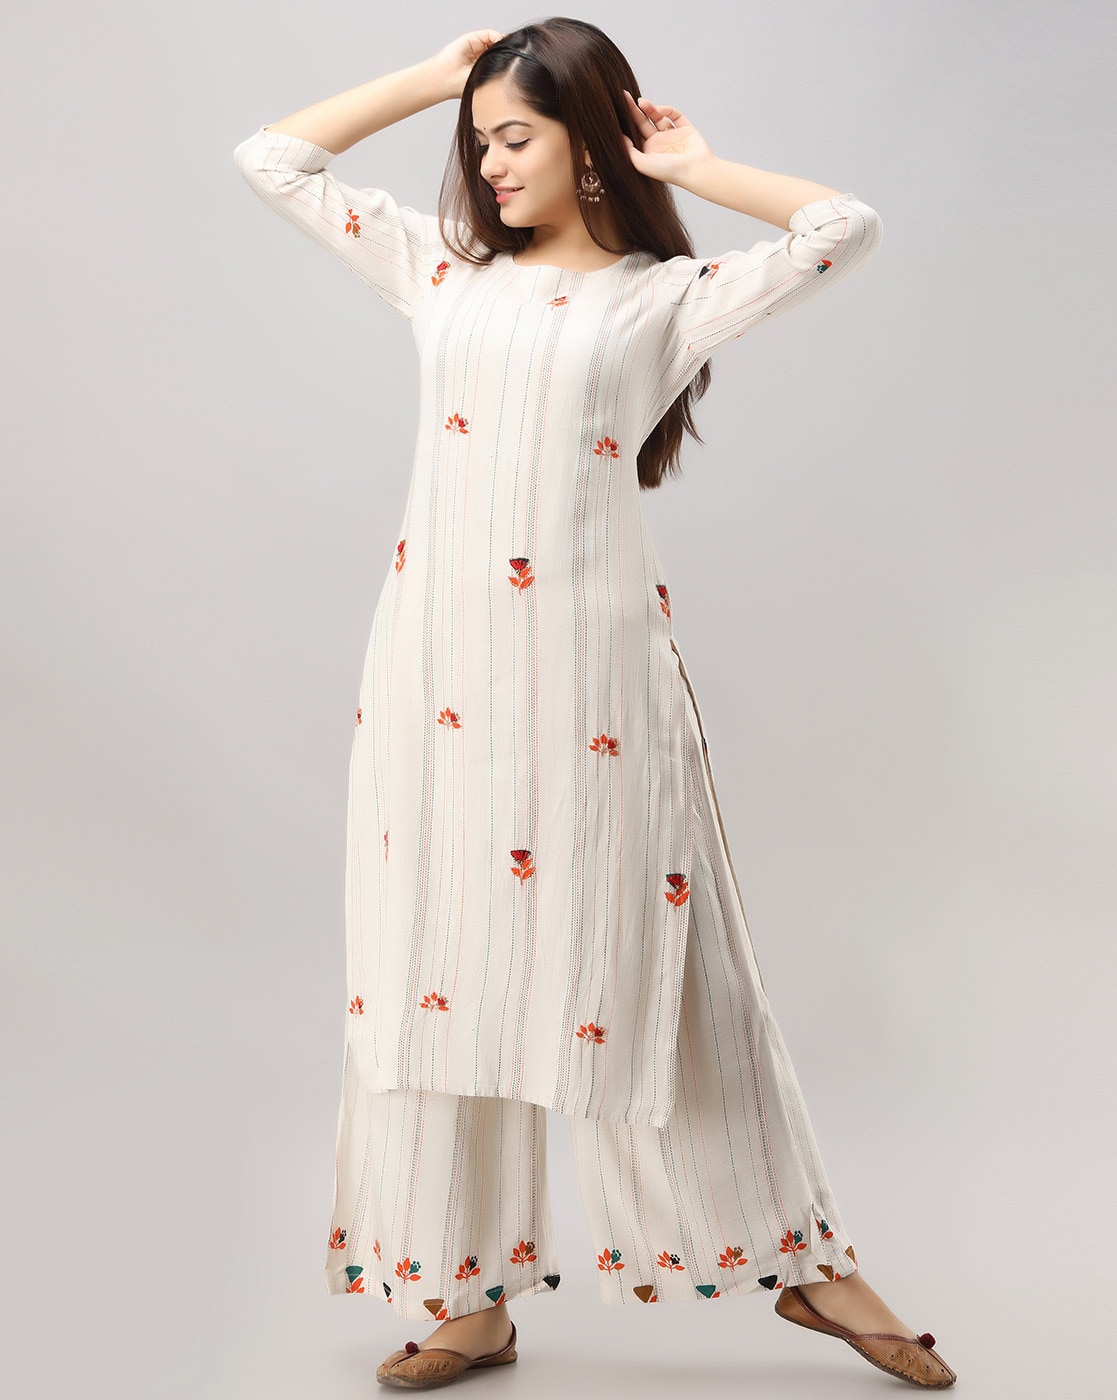 Kirara Sui Dhaga Vol 5 Designer Cotton Kurti For Daily wear Collection